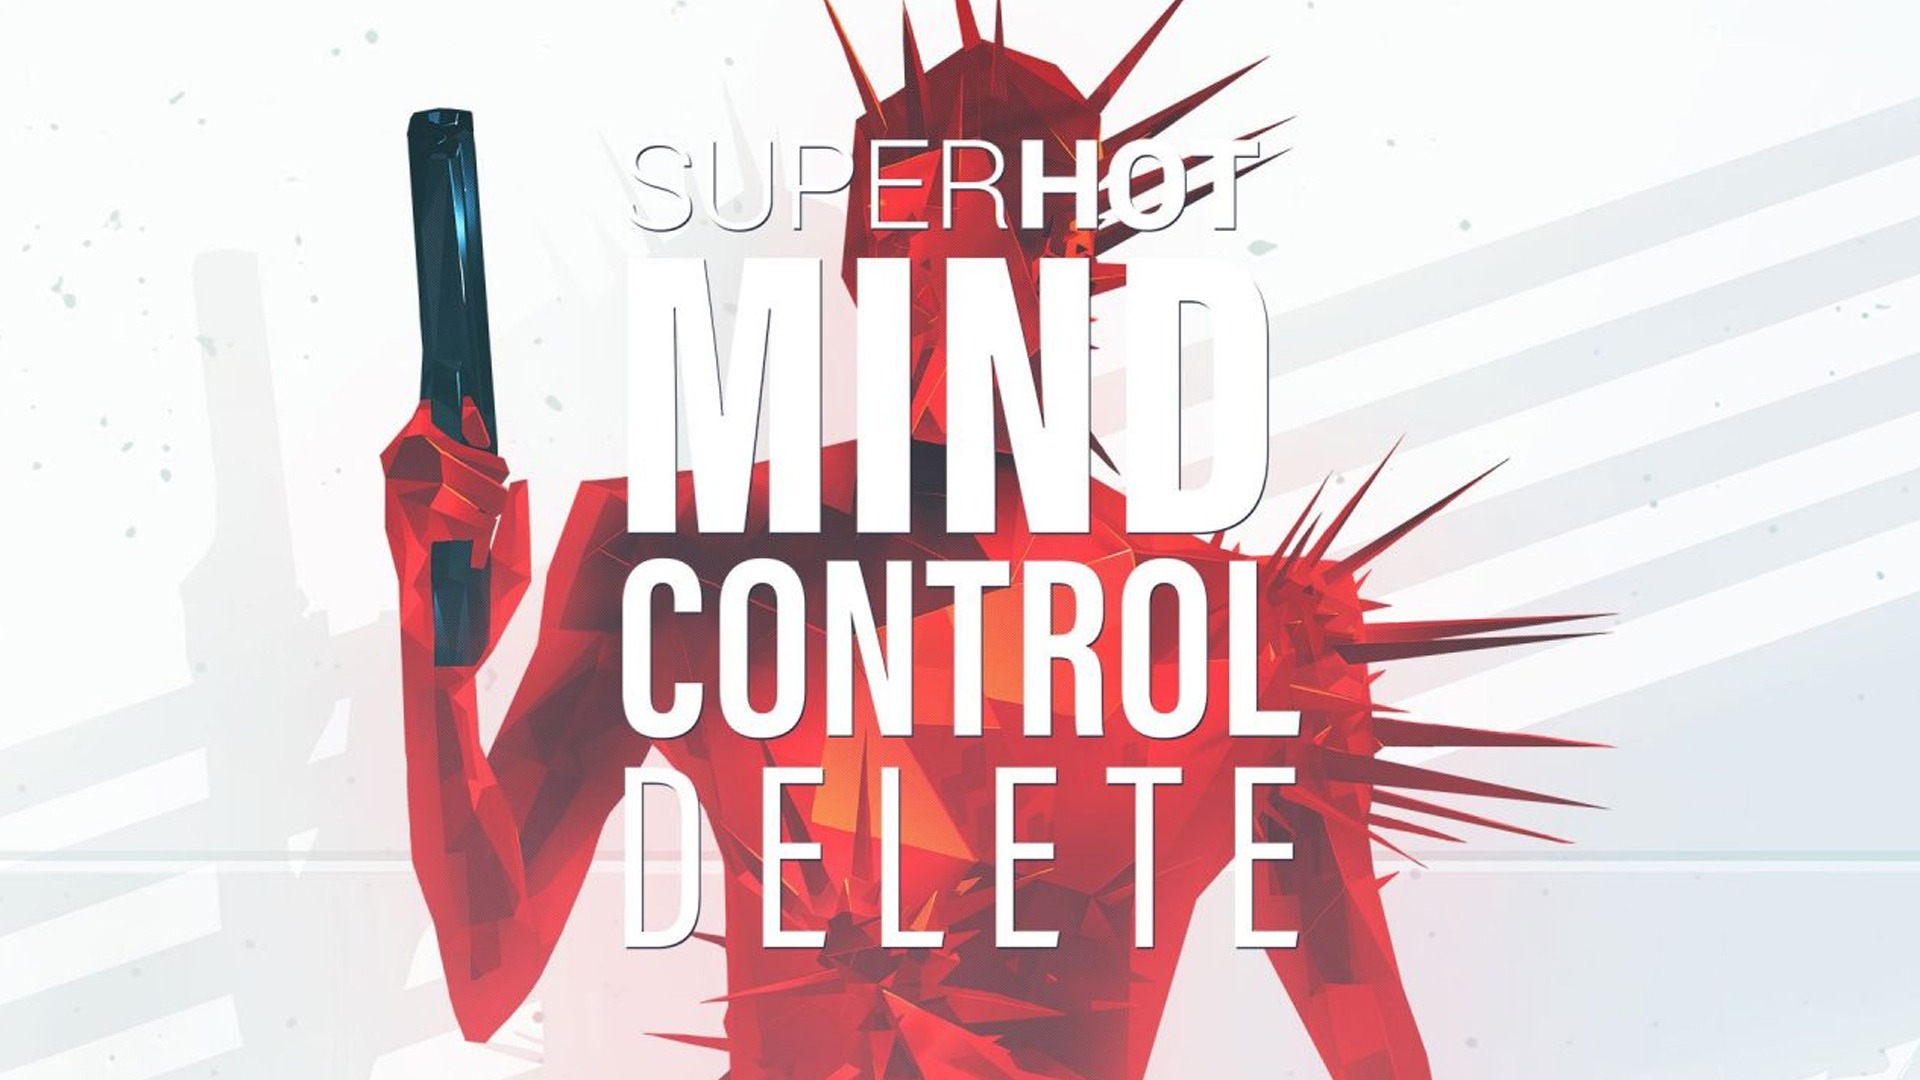 superhot mind control delete